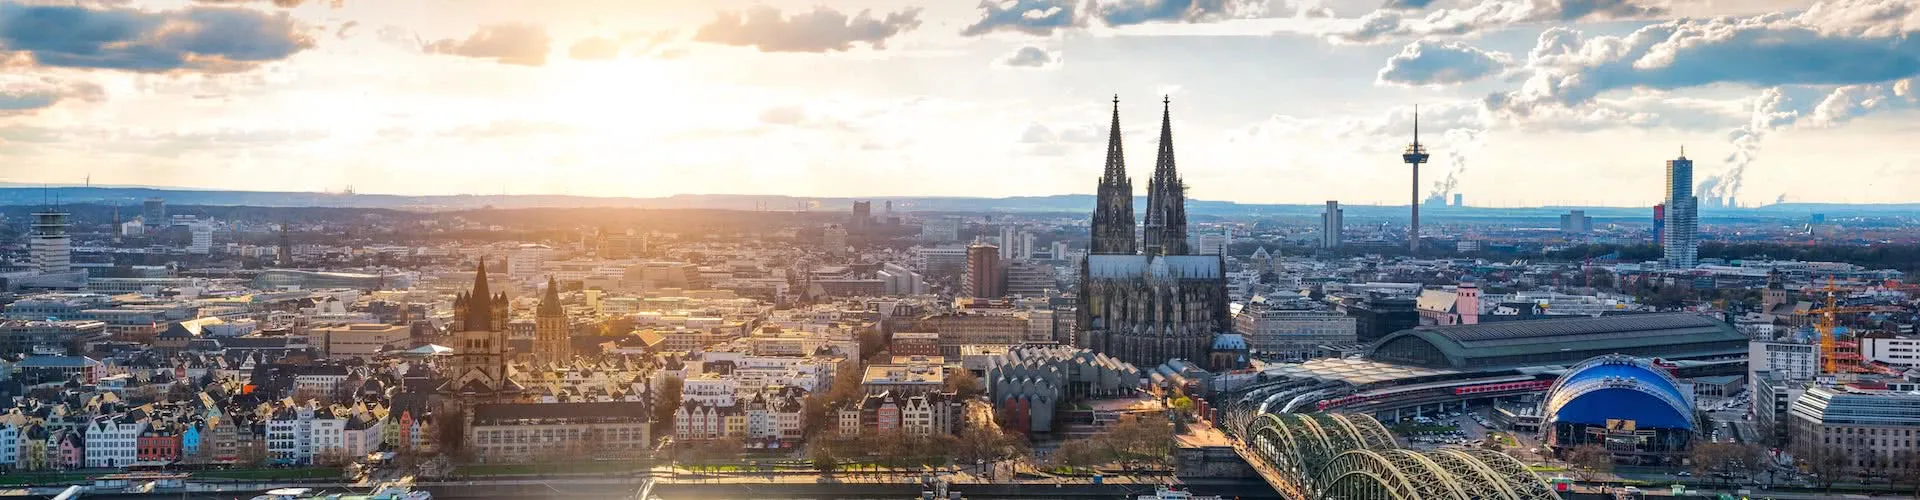 Cologne panorama image